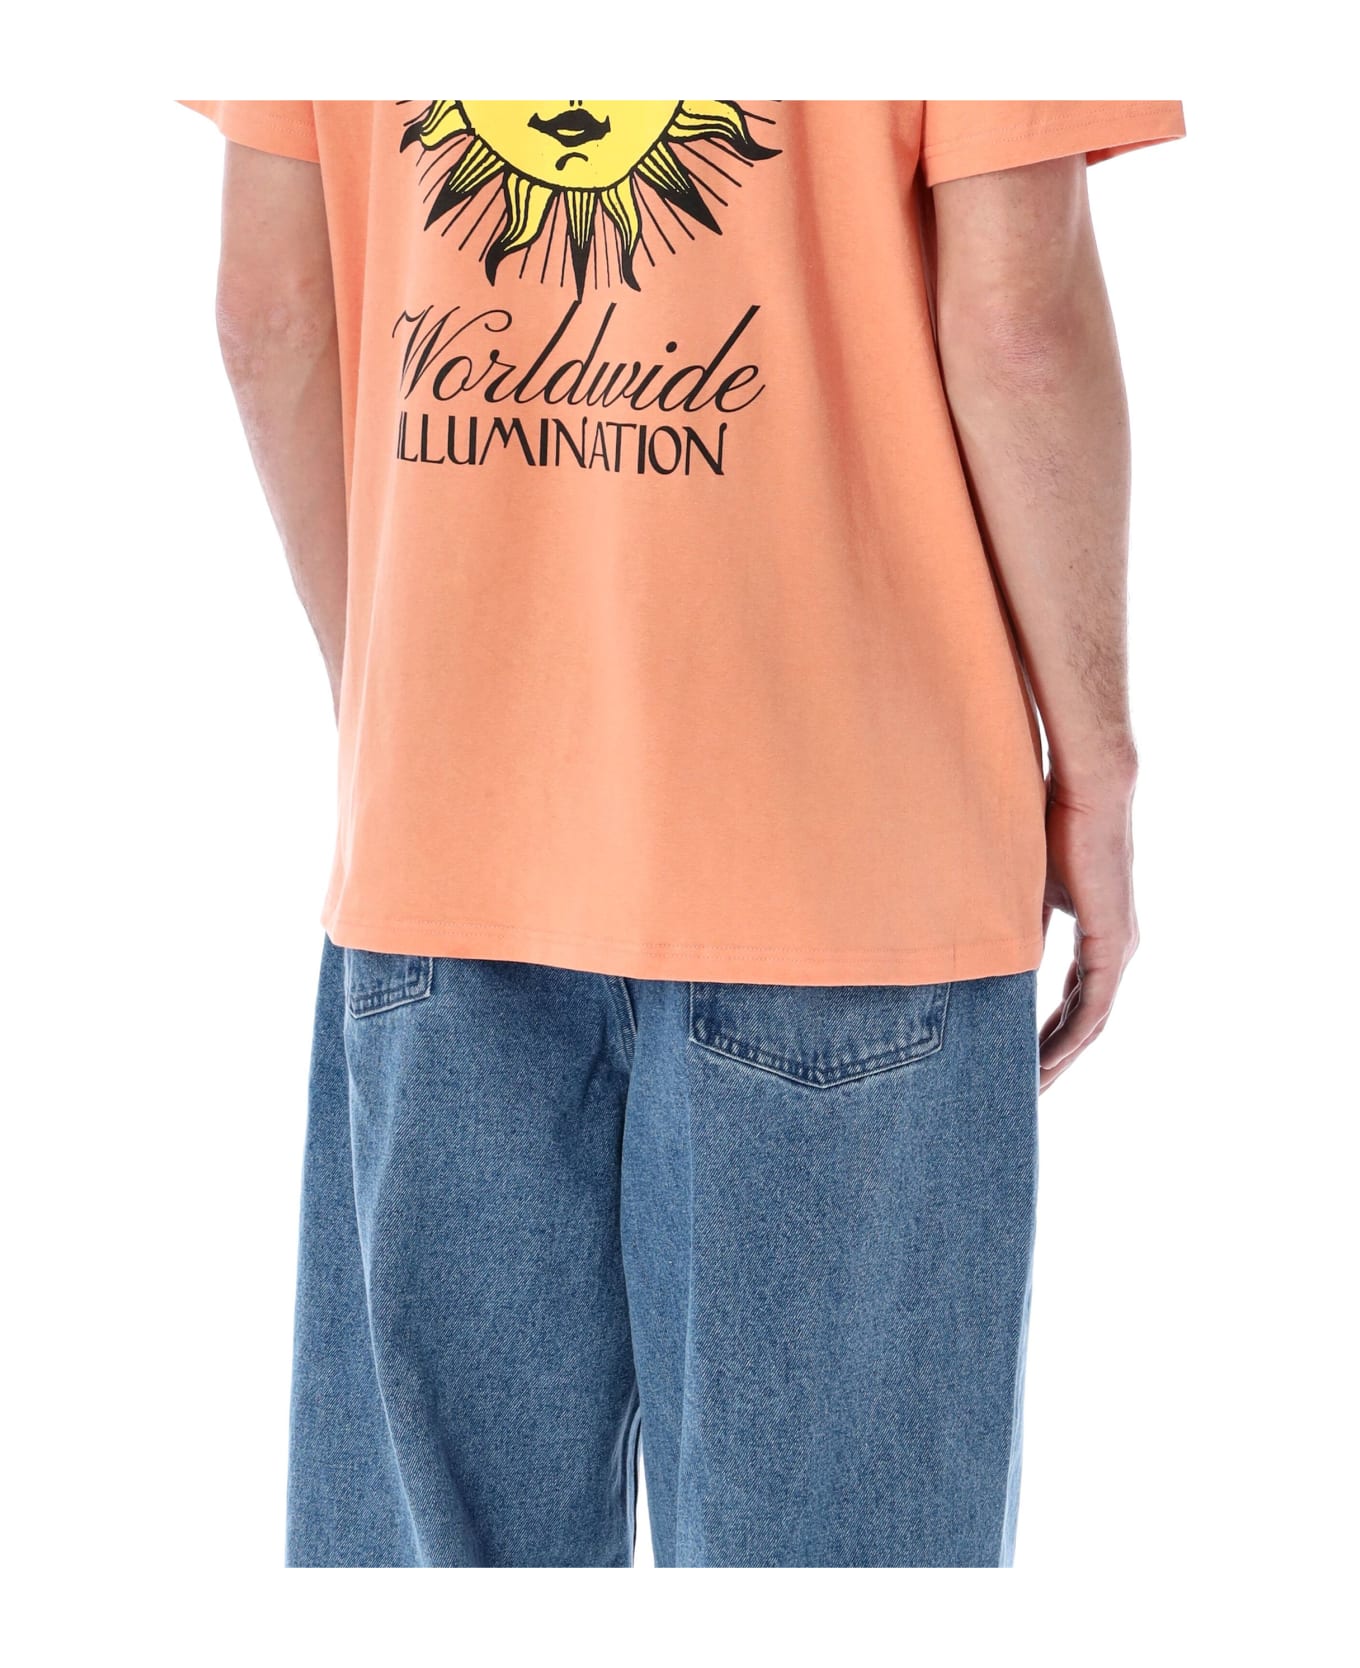 Obey Illumination Classic T-shirt - CITRUS